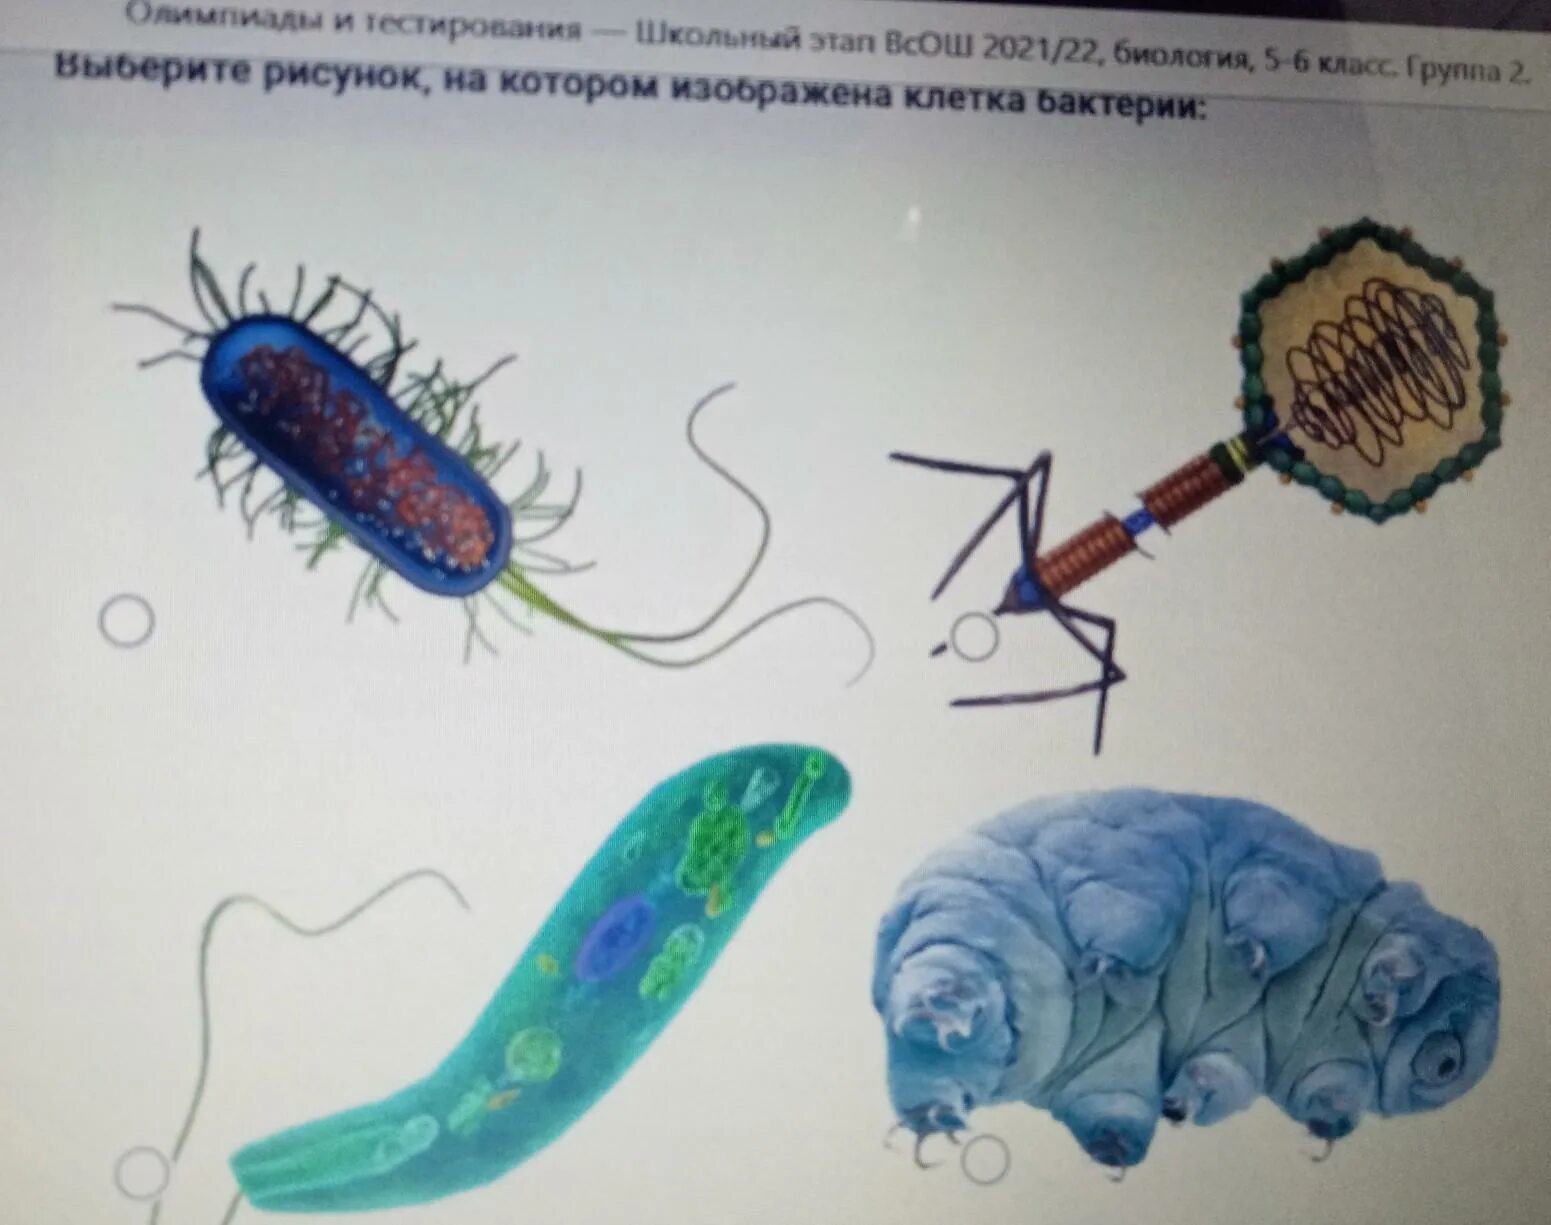 На каком рисунке изображена клетка бактерий. Клетка бактерии. Клетка бактерии рисунок. Бактерии изображенные на рисунке. Выберите картинку, на которой изображена клетка бактерии.